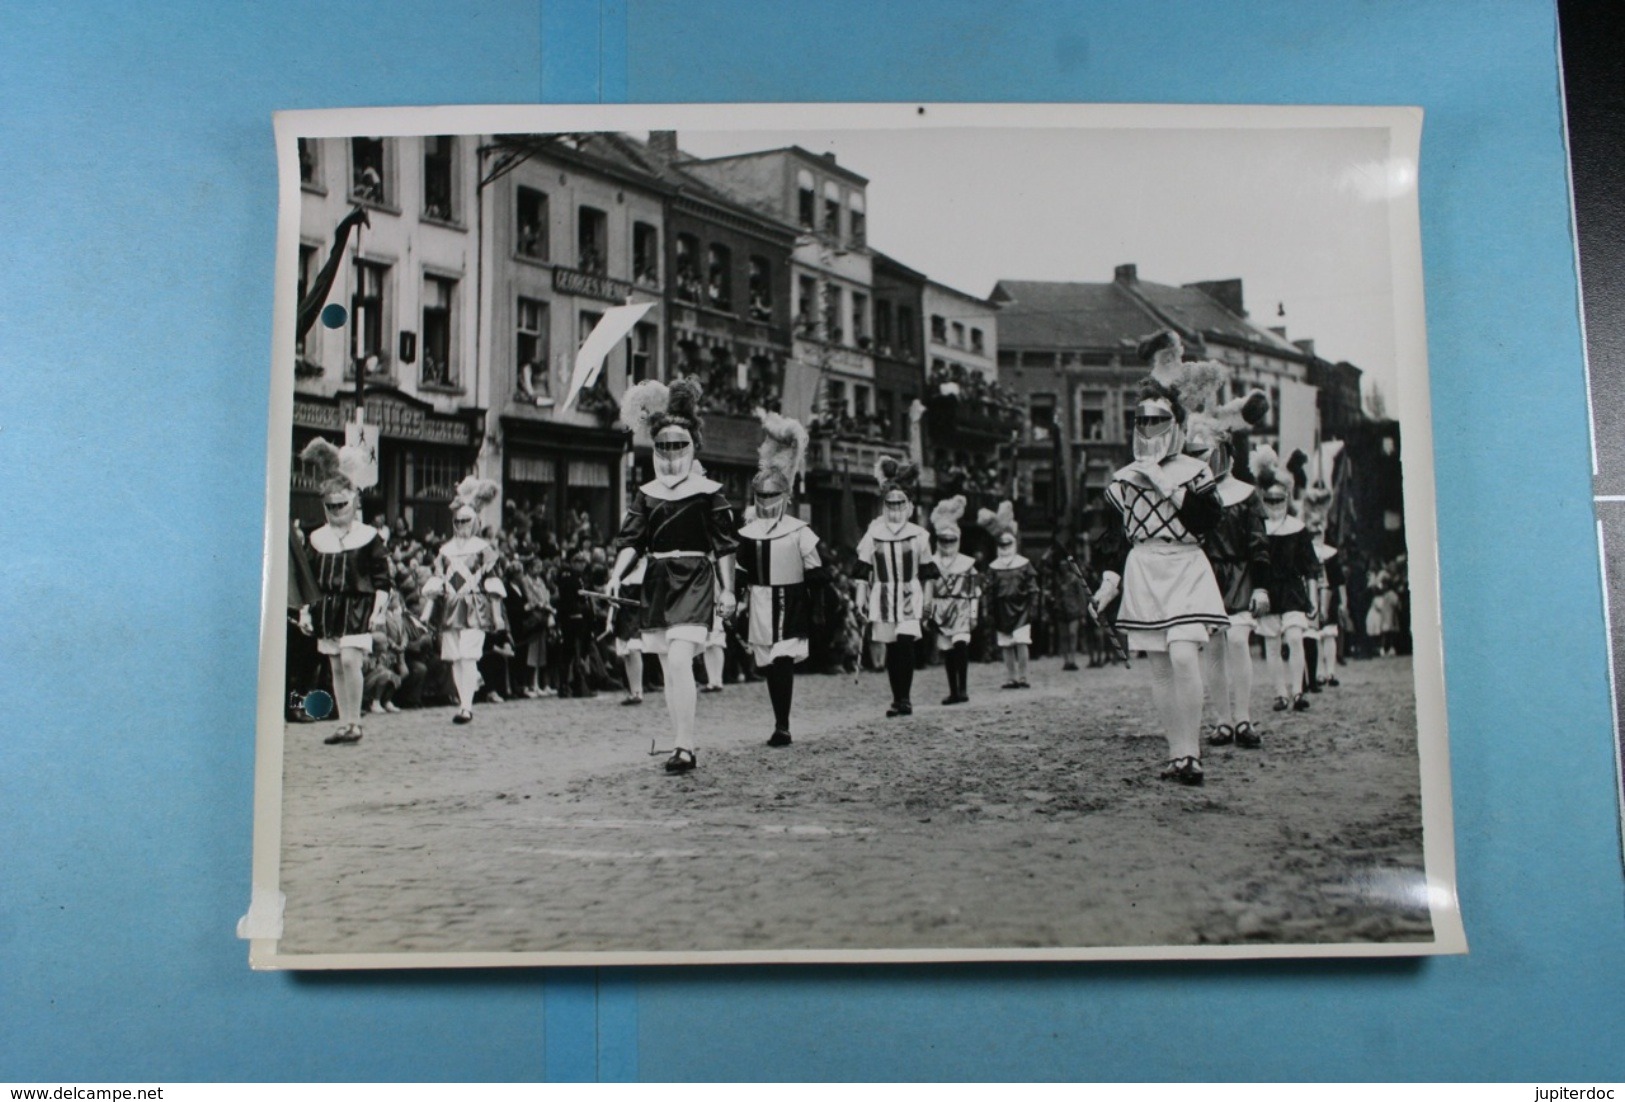 24 photos du Carnaval de Binche 1949, 1950, 1951